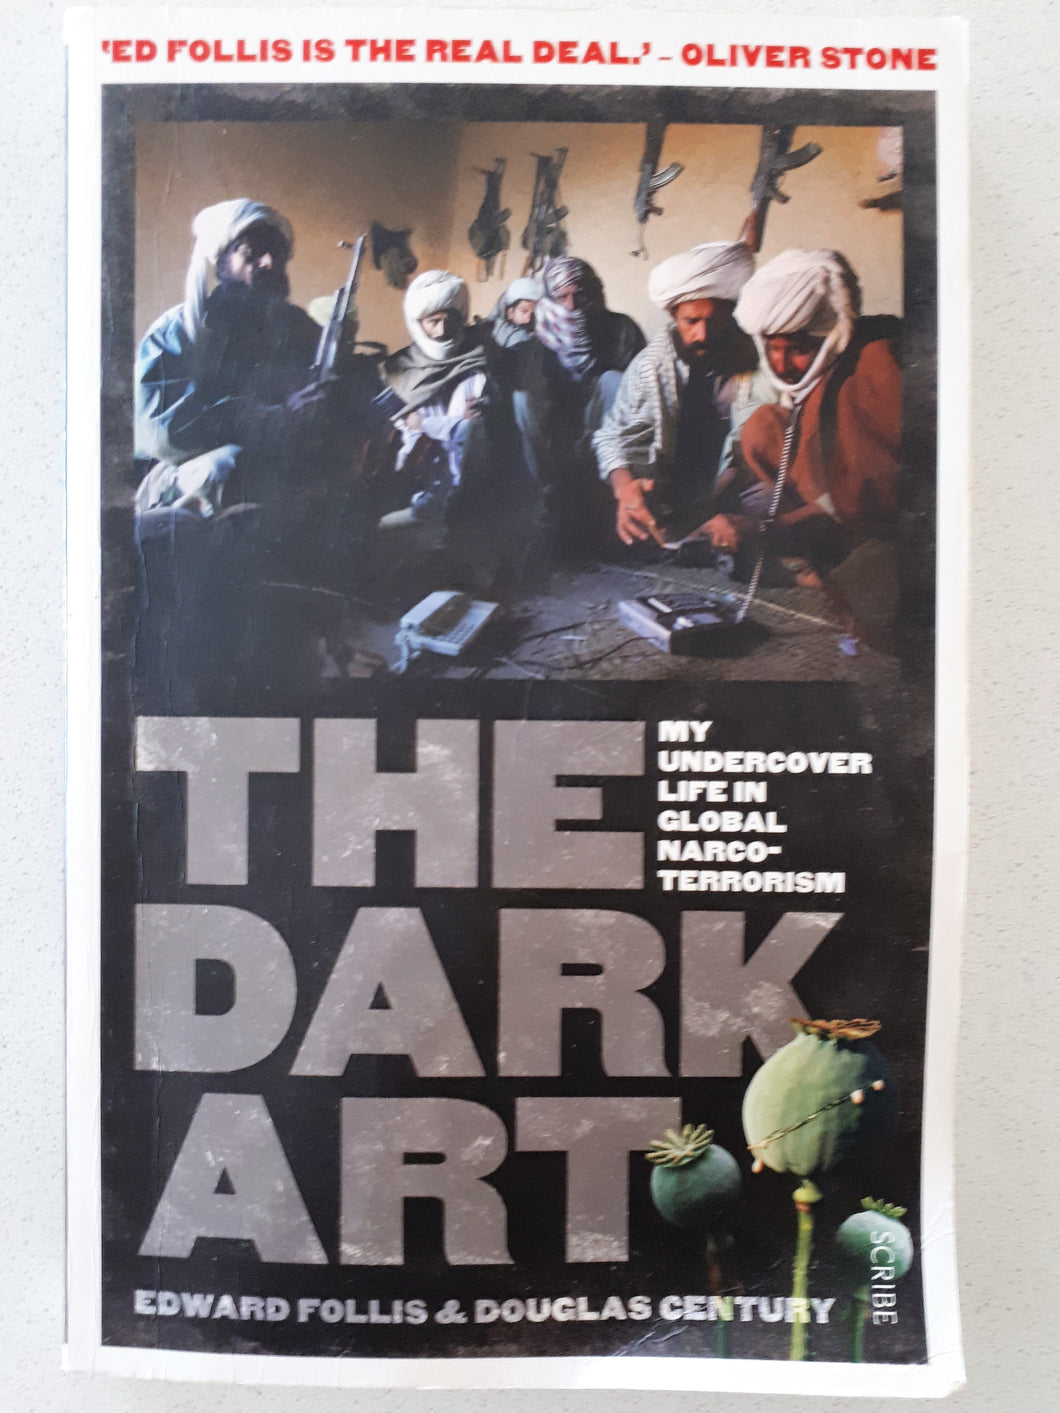 The Dark Art by Edward Follis & Douglas Century